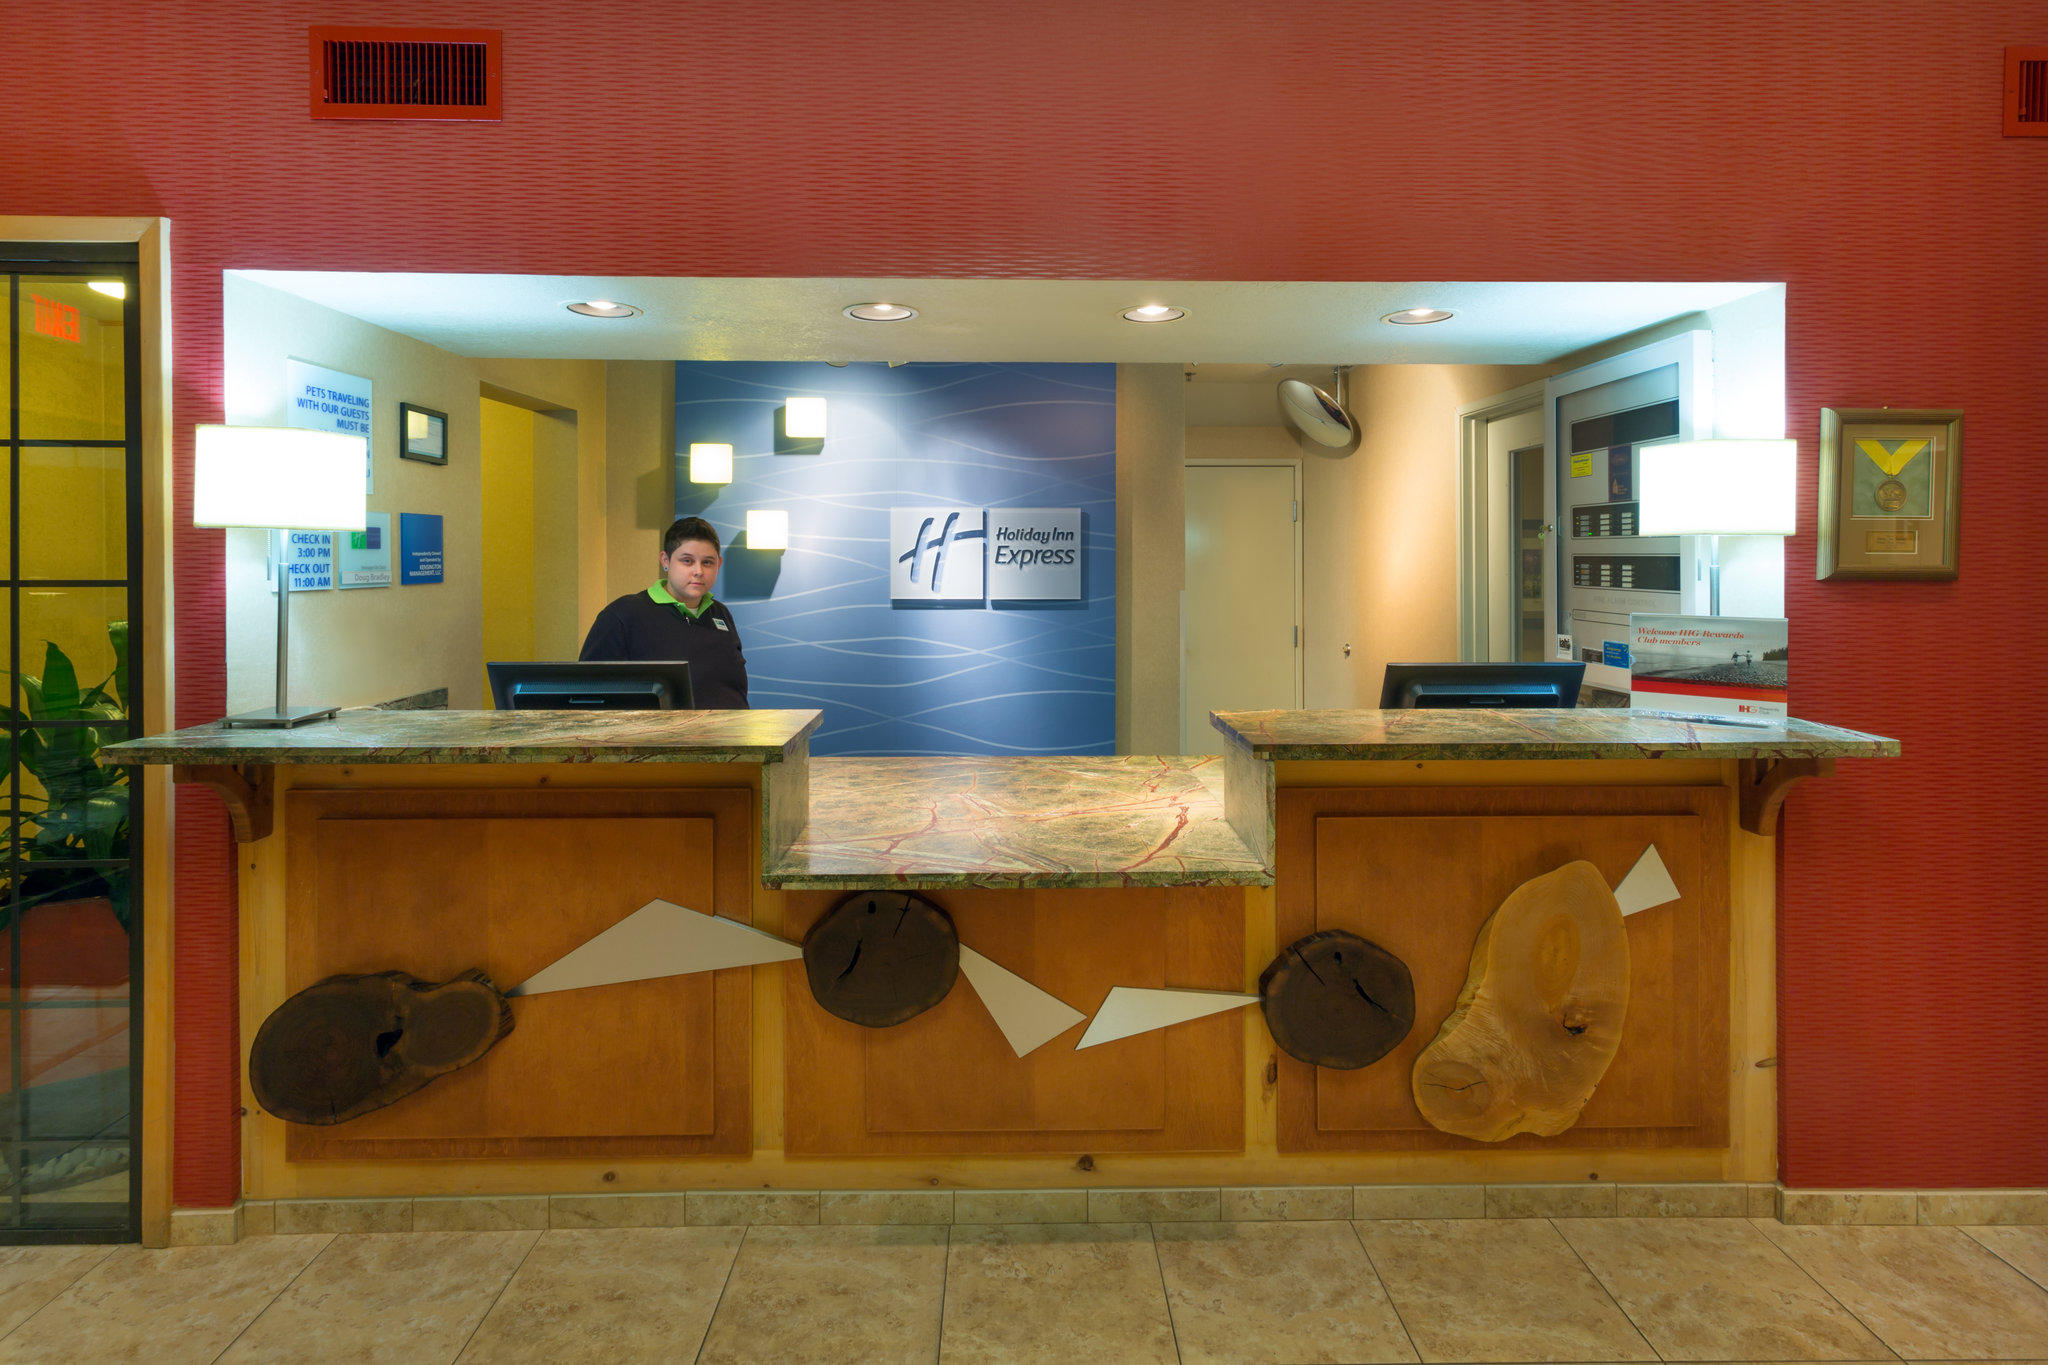 Holiday Inn Express Grants Pass Photo